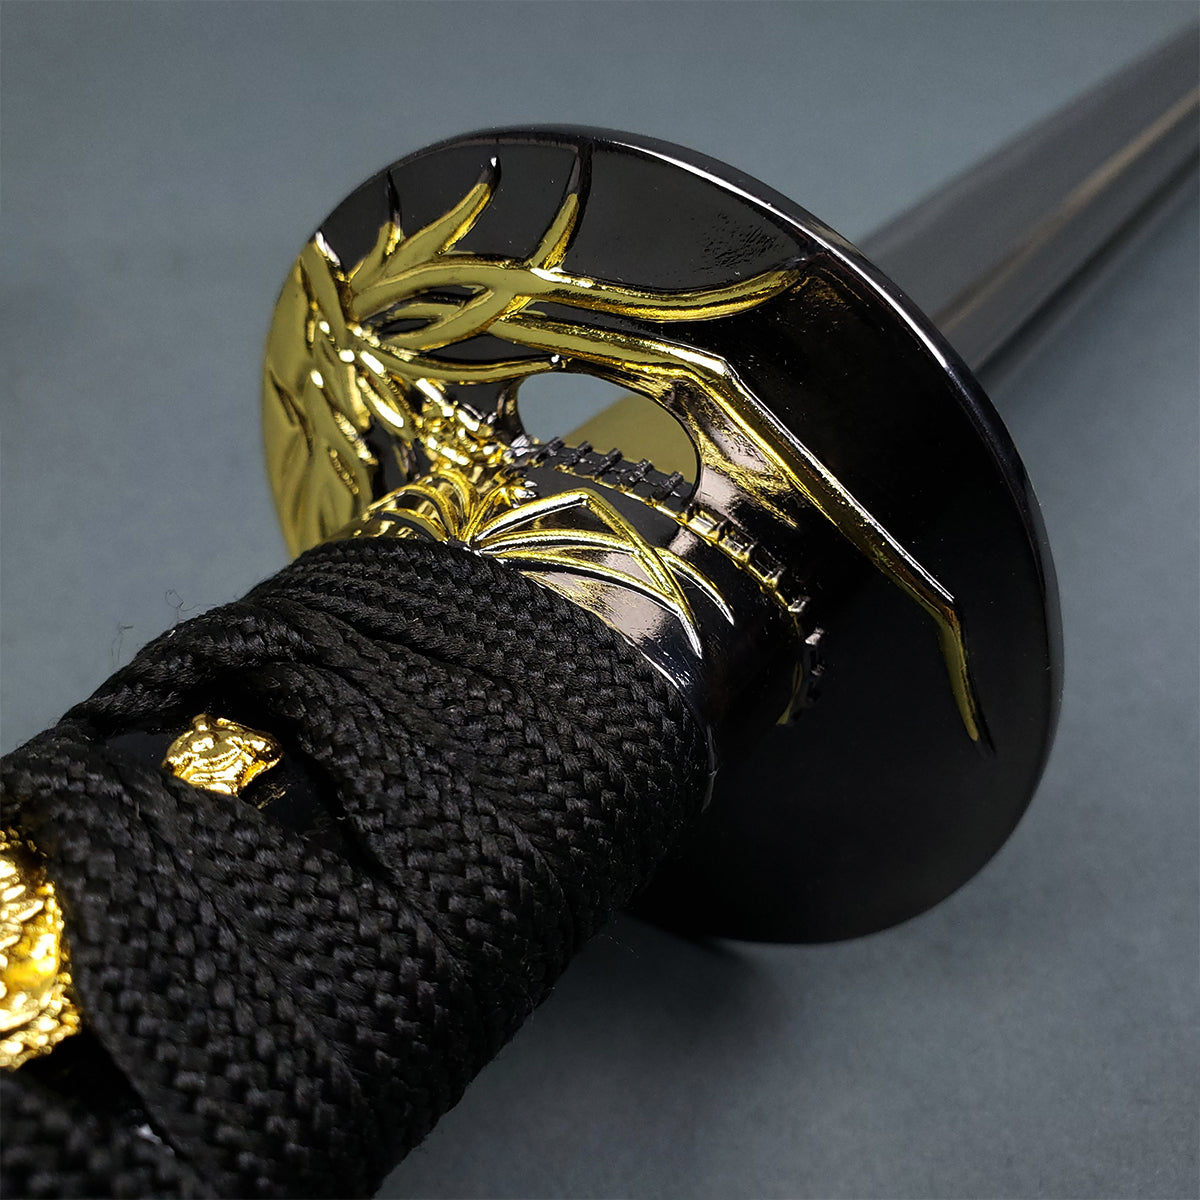 Musha Higanbana Katana w/ Tsuka Dagger (Black)